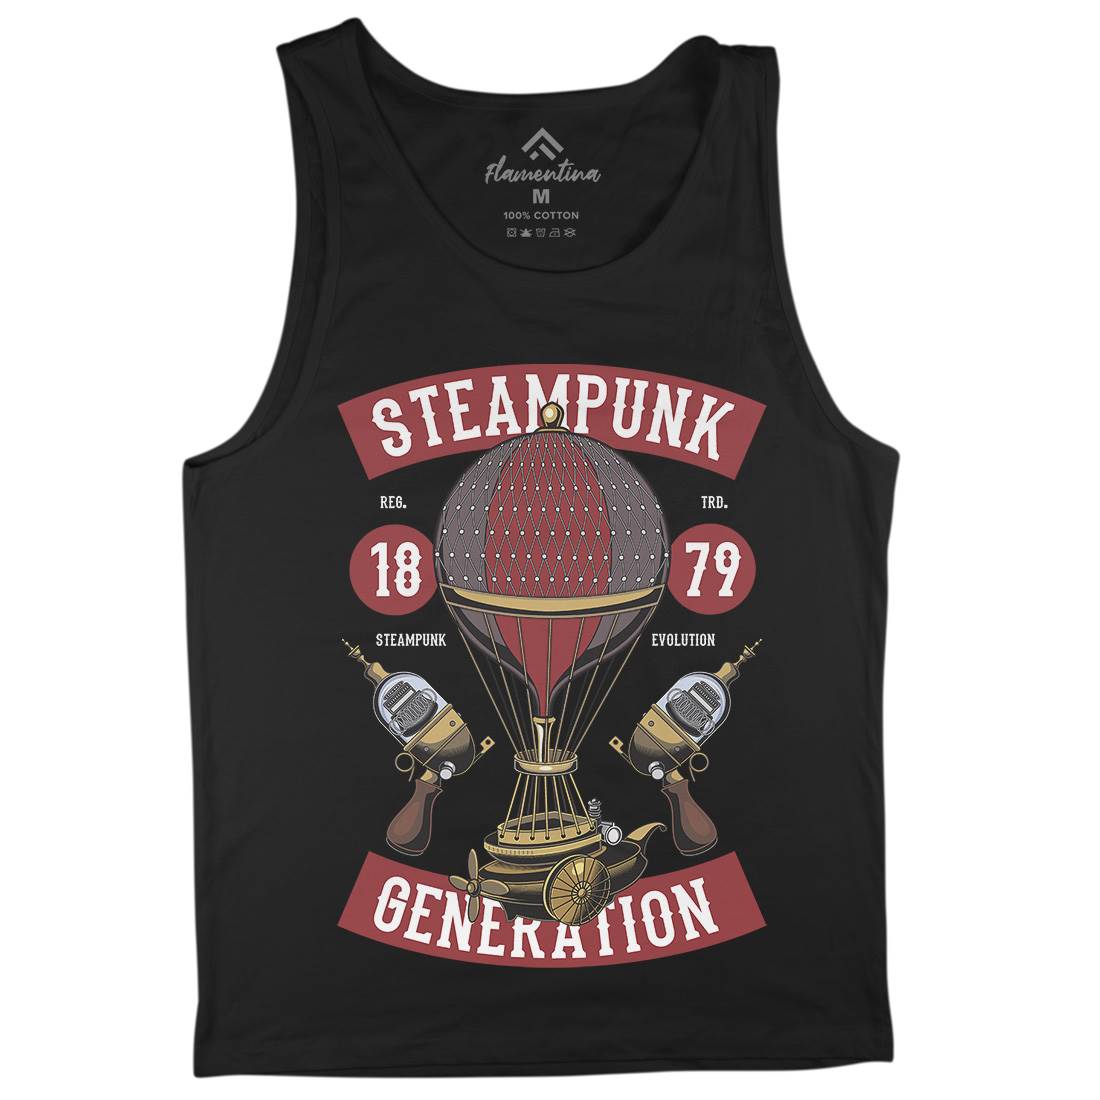 Generation Mens Tank Top Vest Steampunk C449